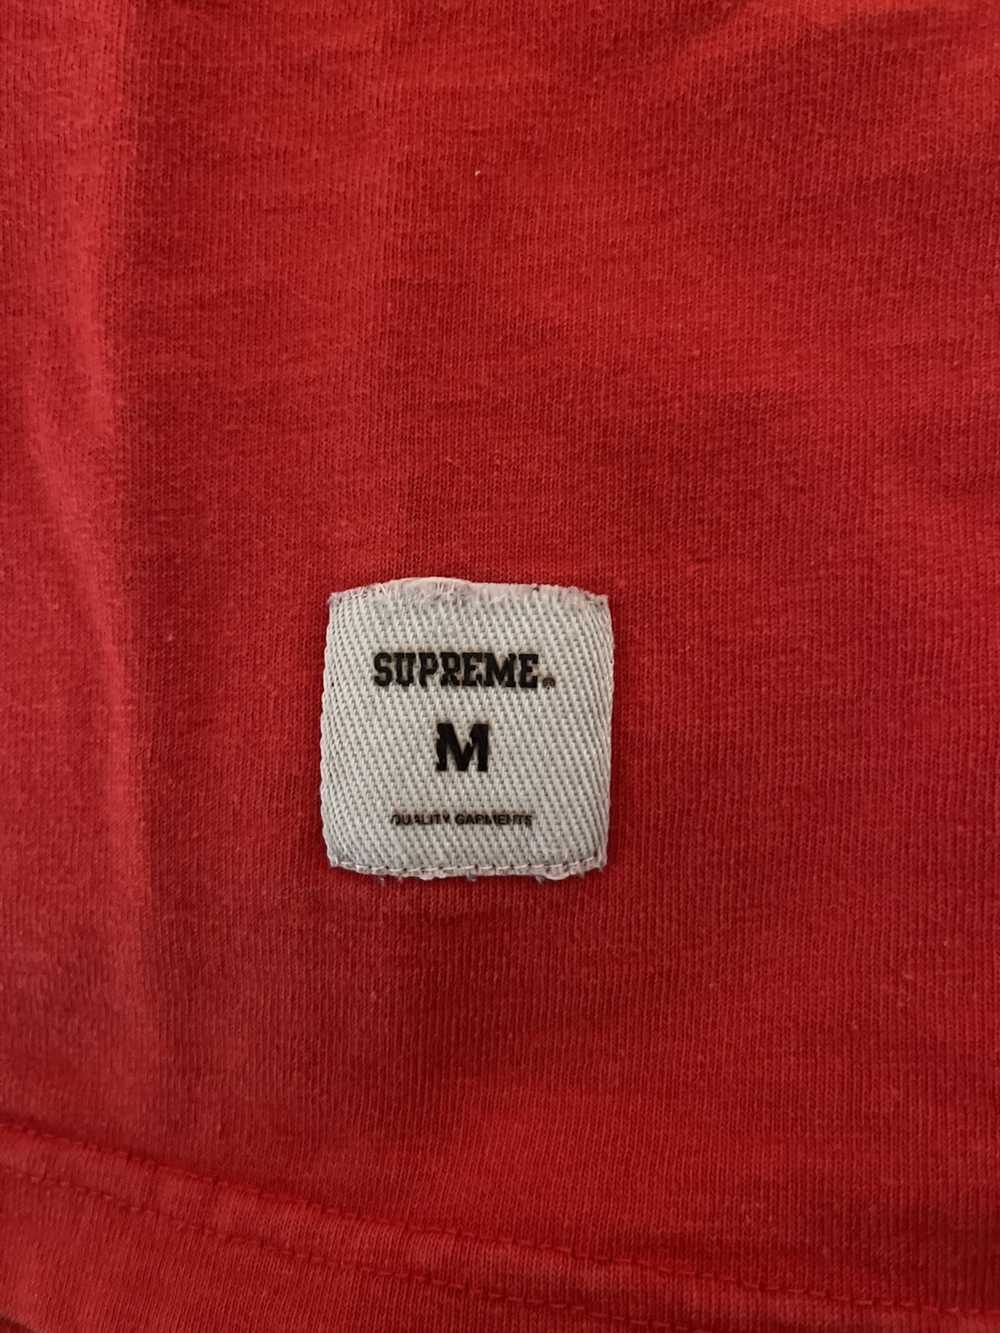 Supreme Supreme Short Sleeve T-Shirt - image 4